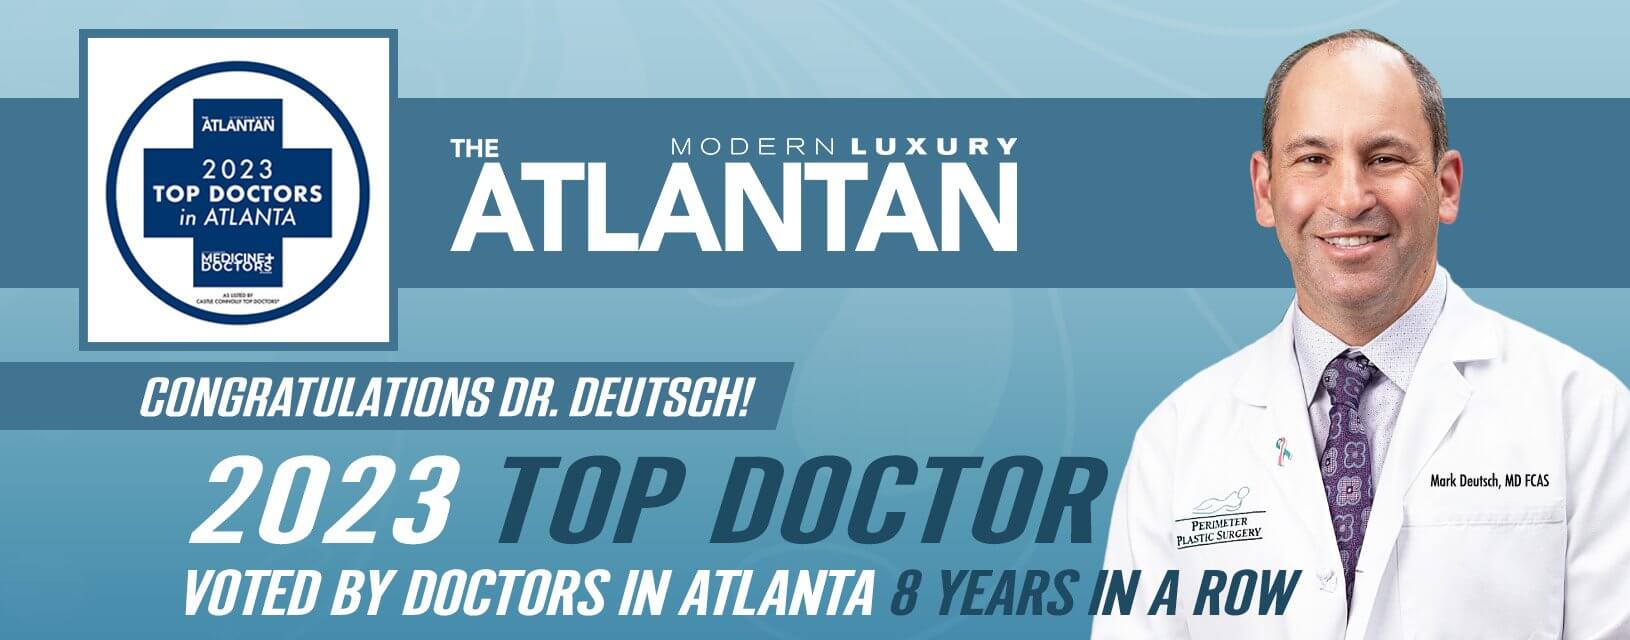 The Atlantan 2023 Top Doctor Award: Dr. Mark Deutsch, MD